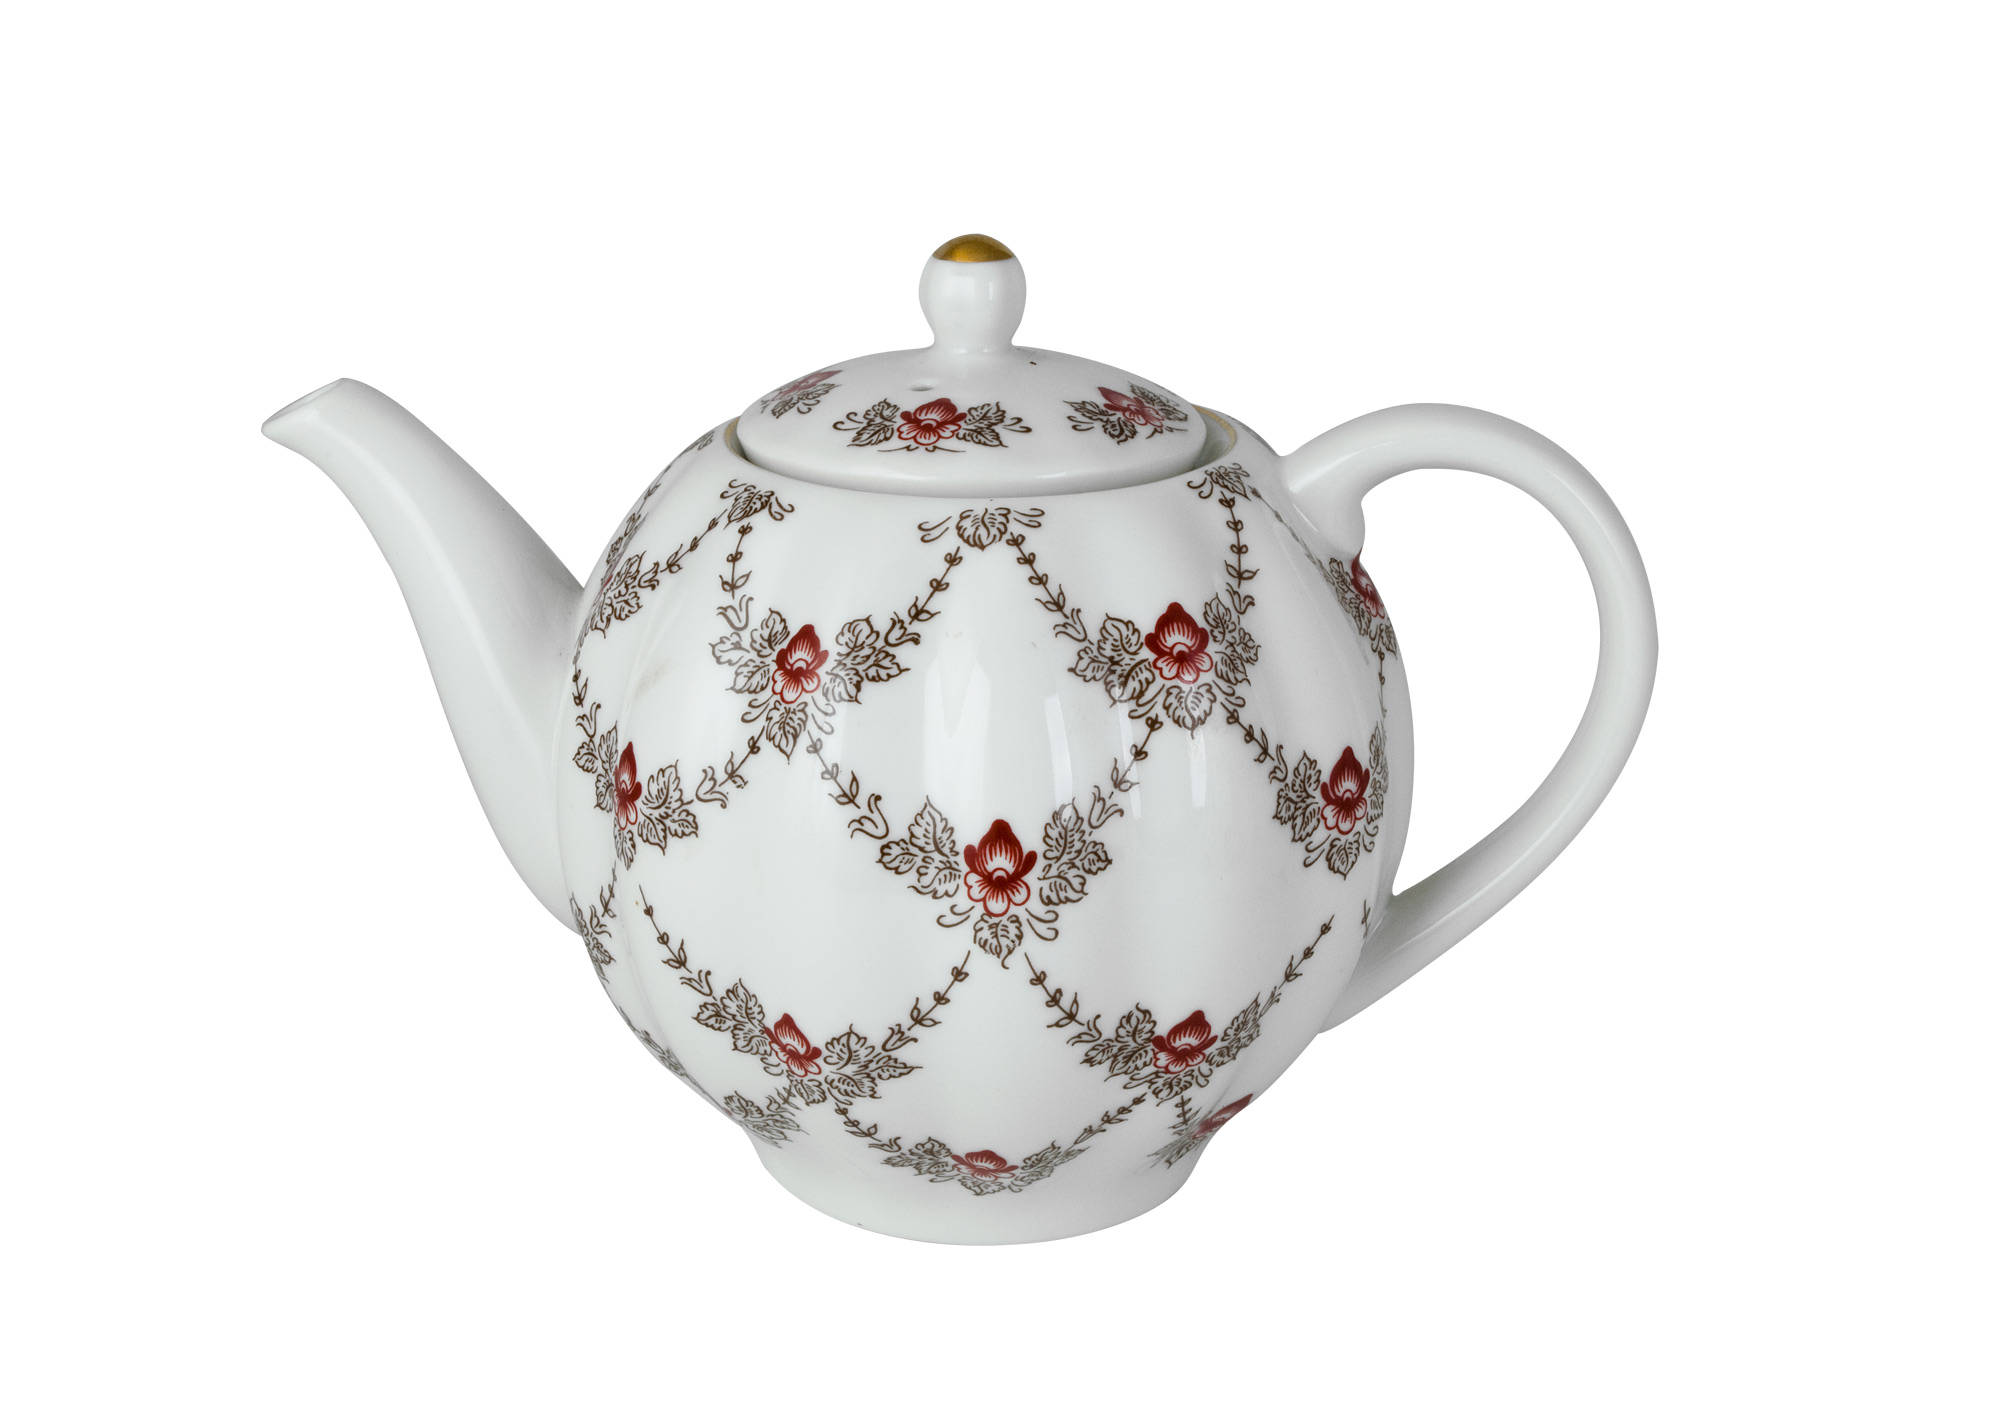 Buy Garlands Teapot at GoldenCockerel.com